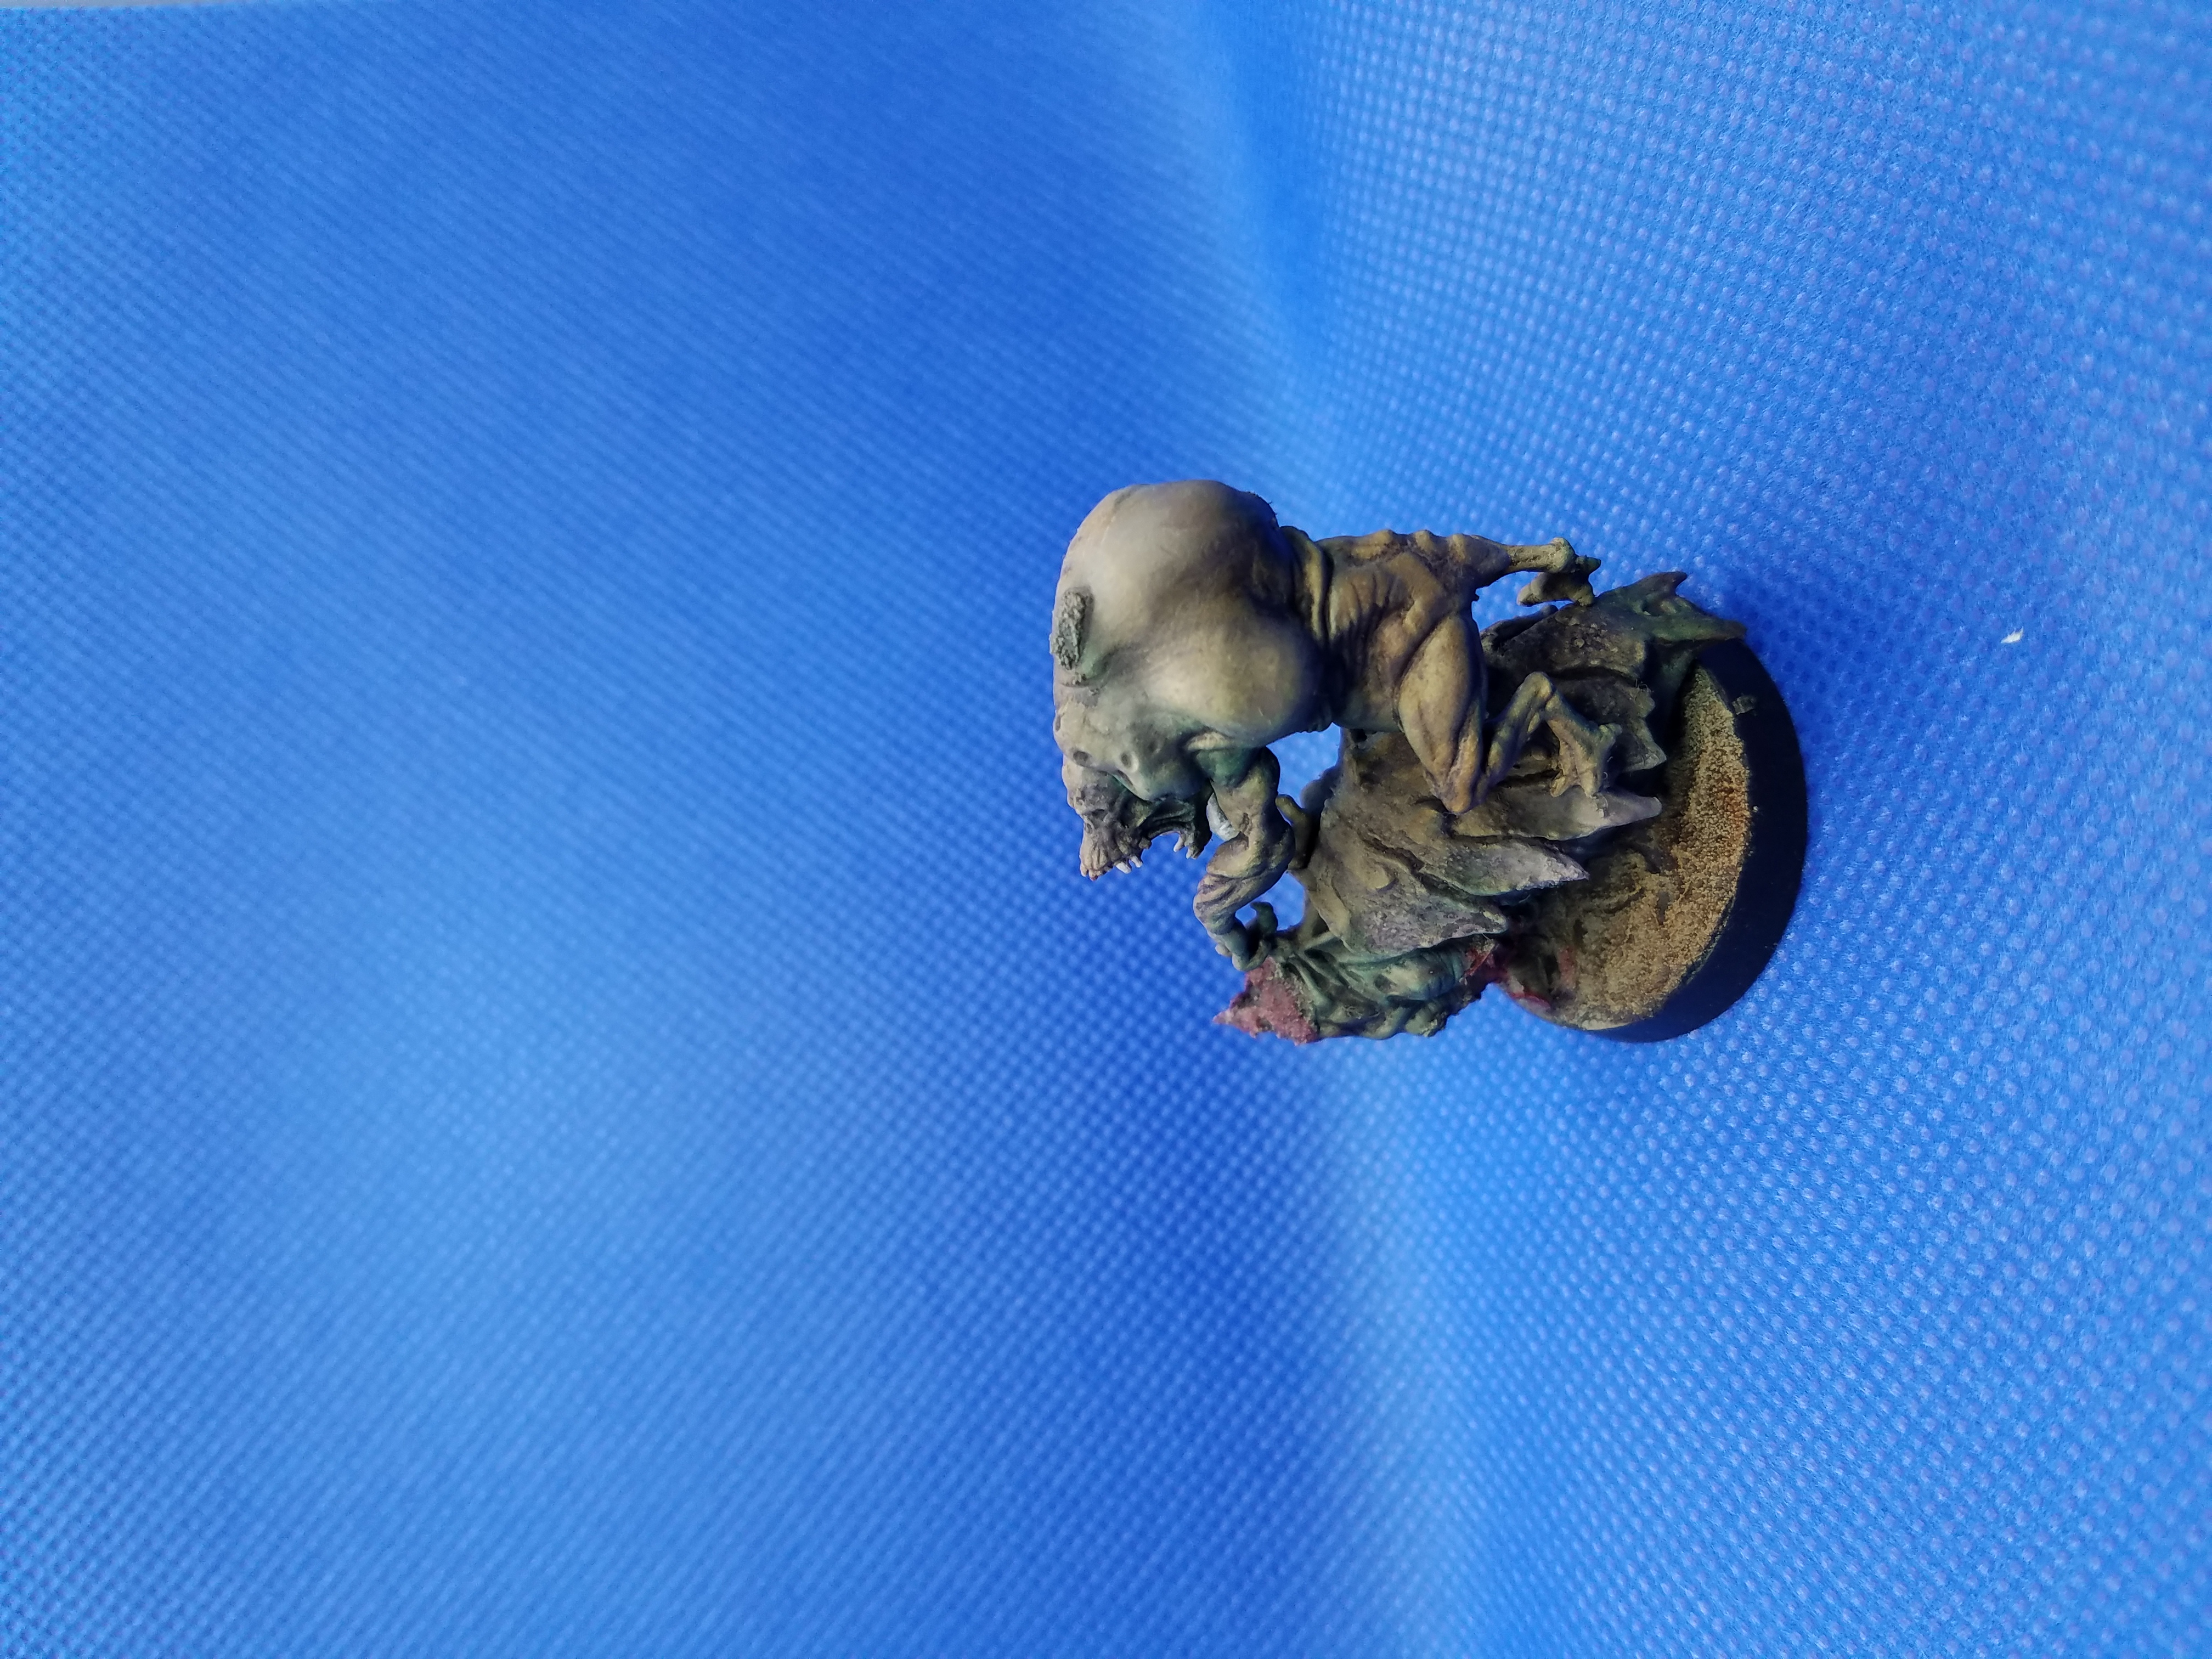 Plague demon 10mm Warmaster miniatures 3D printed in resin 